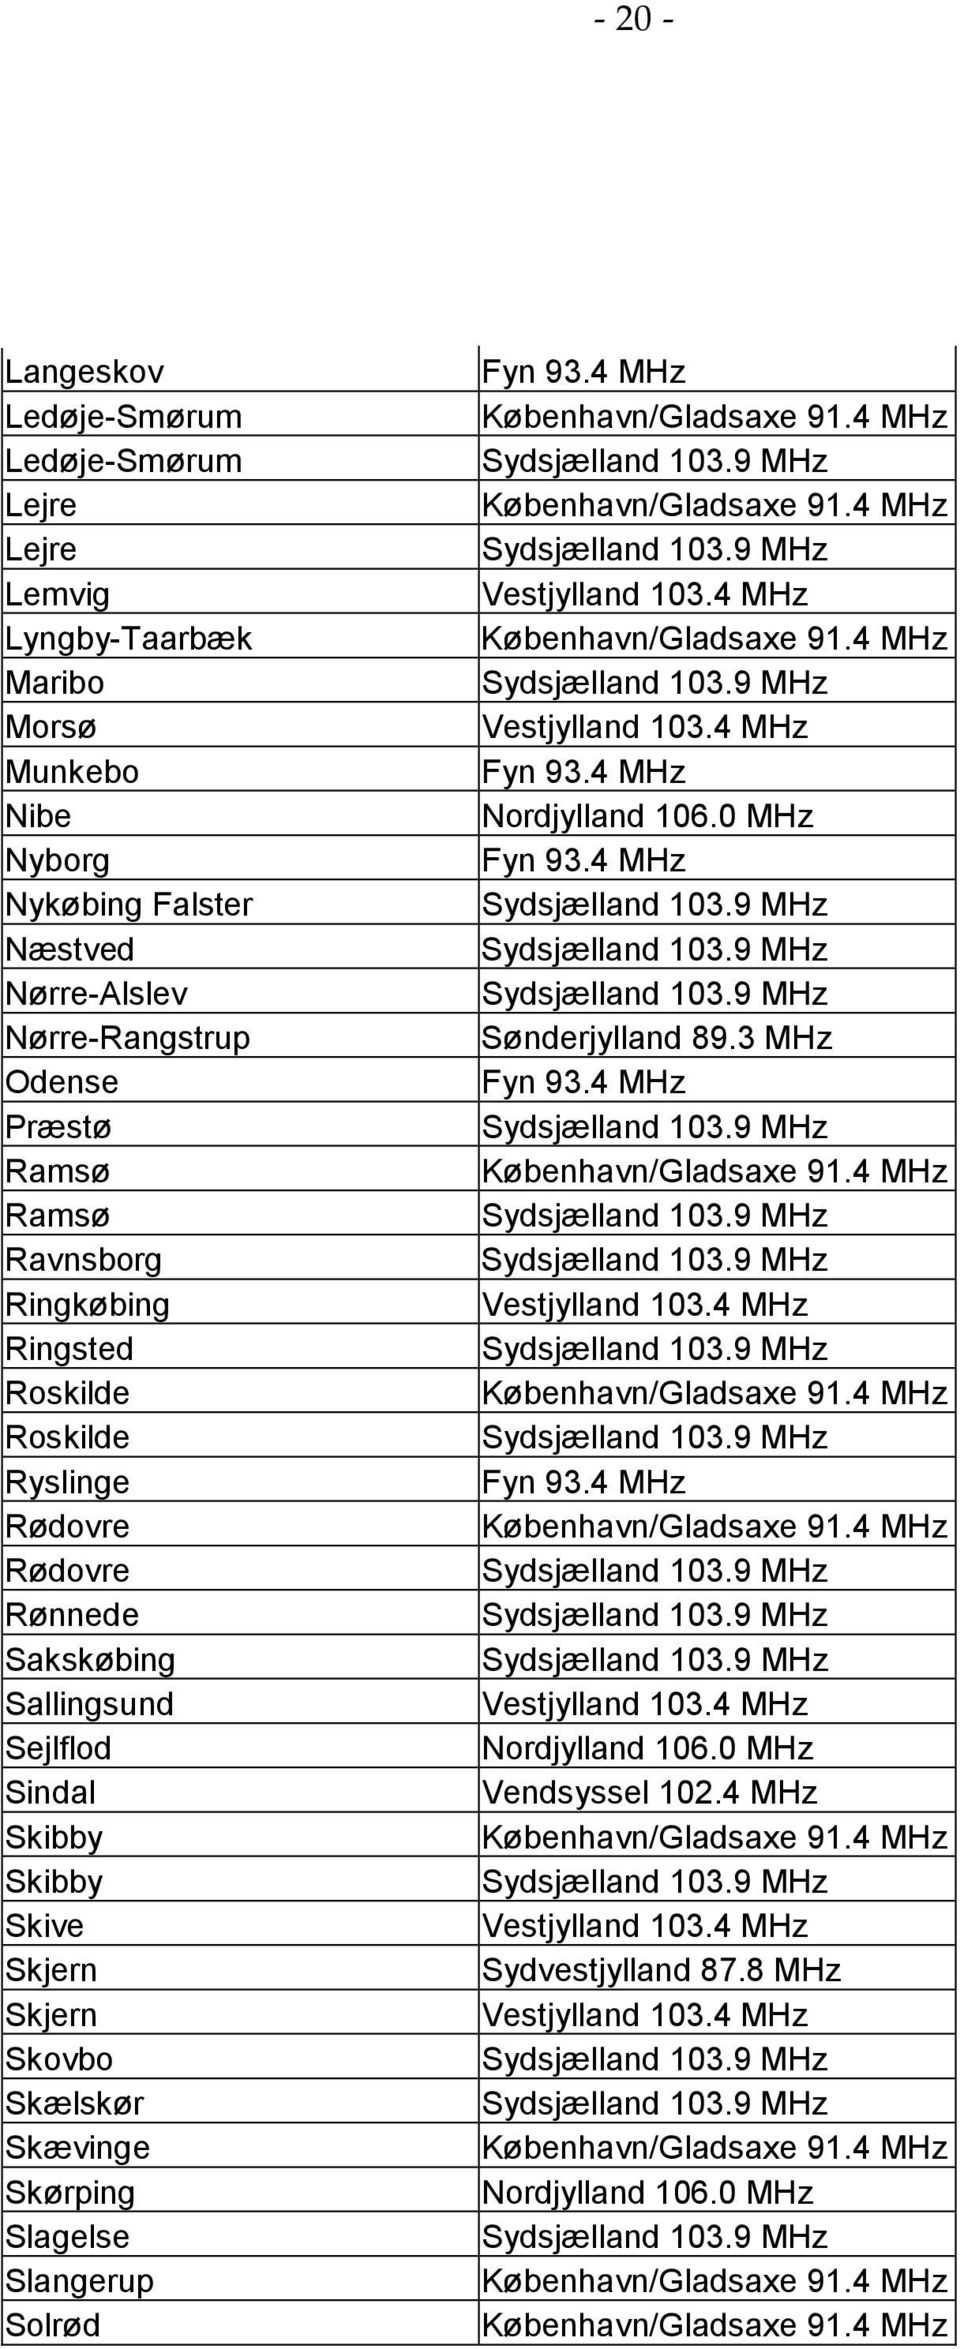 Slangerup Solrød Fyn 93.4 MHz København/Gladsaxe 91.4 MHz København/Gladsaxe 91.4 MHz Vestjylland 103.4 MHz København/Gladsaxe 91.4 MHz Vestjylland 103.4 MHz Fyn 93.4 MHz Nordjylland 106.0 MHz Fyn 93.